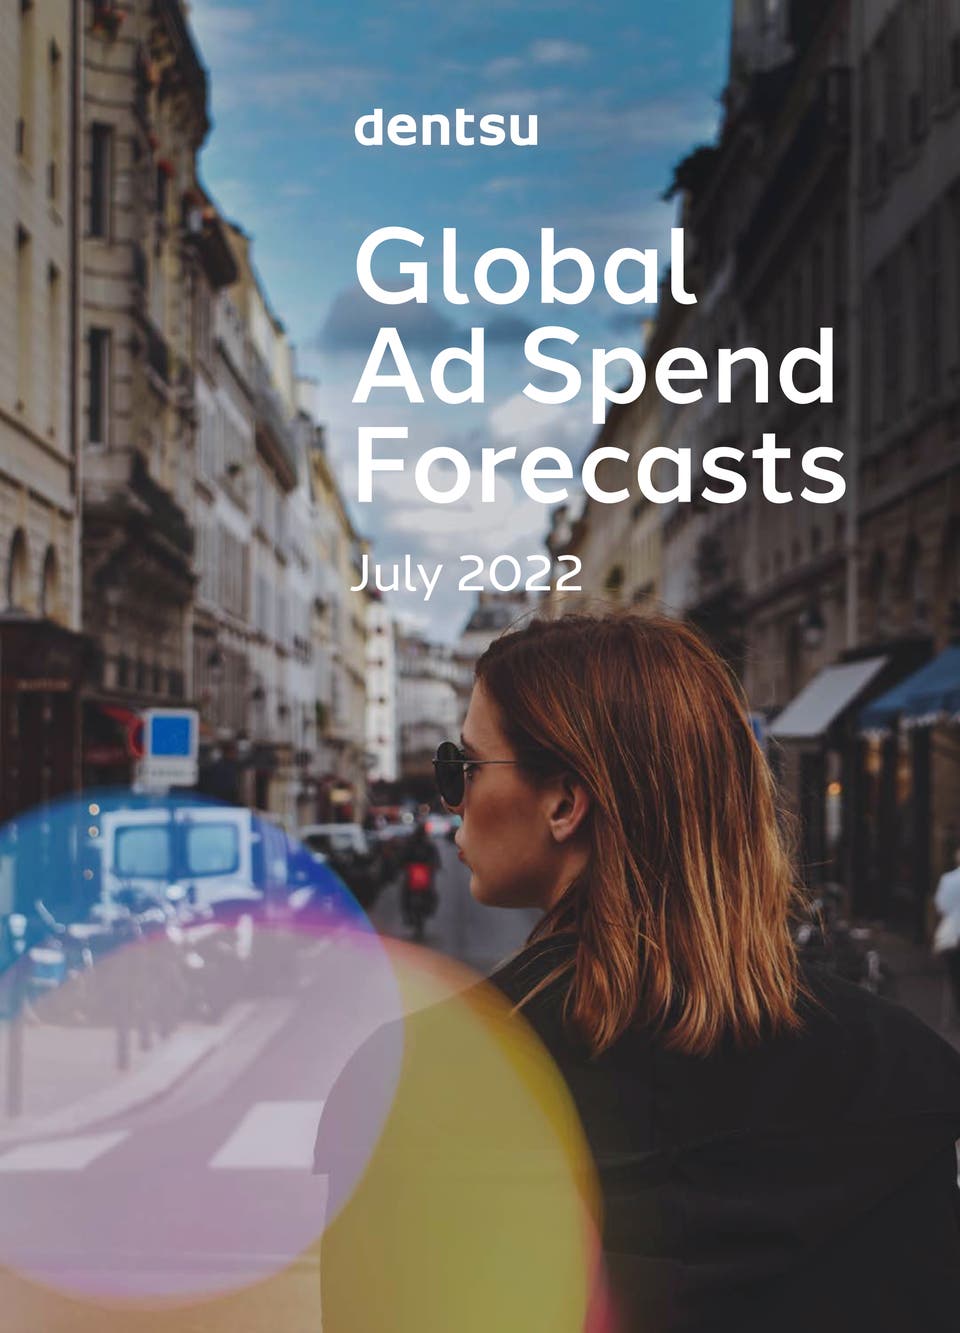 Dentsu Global Ad Spend Forecasts: July 2022